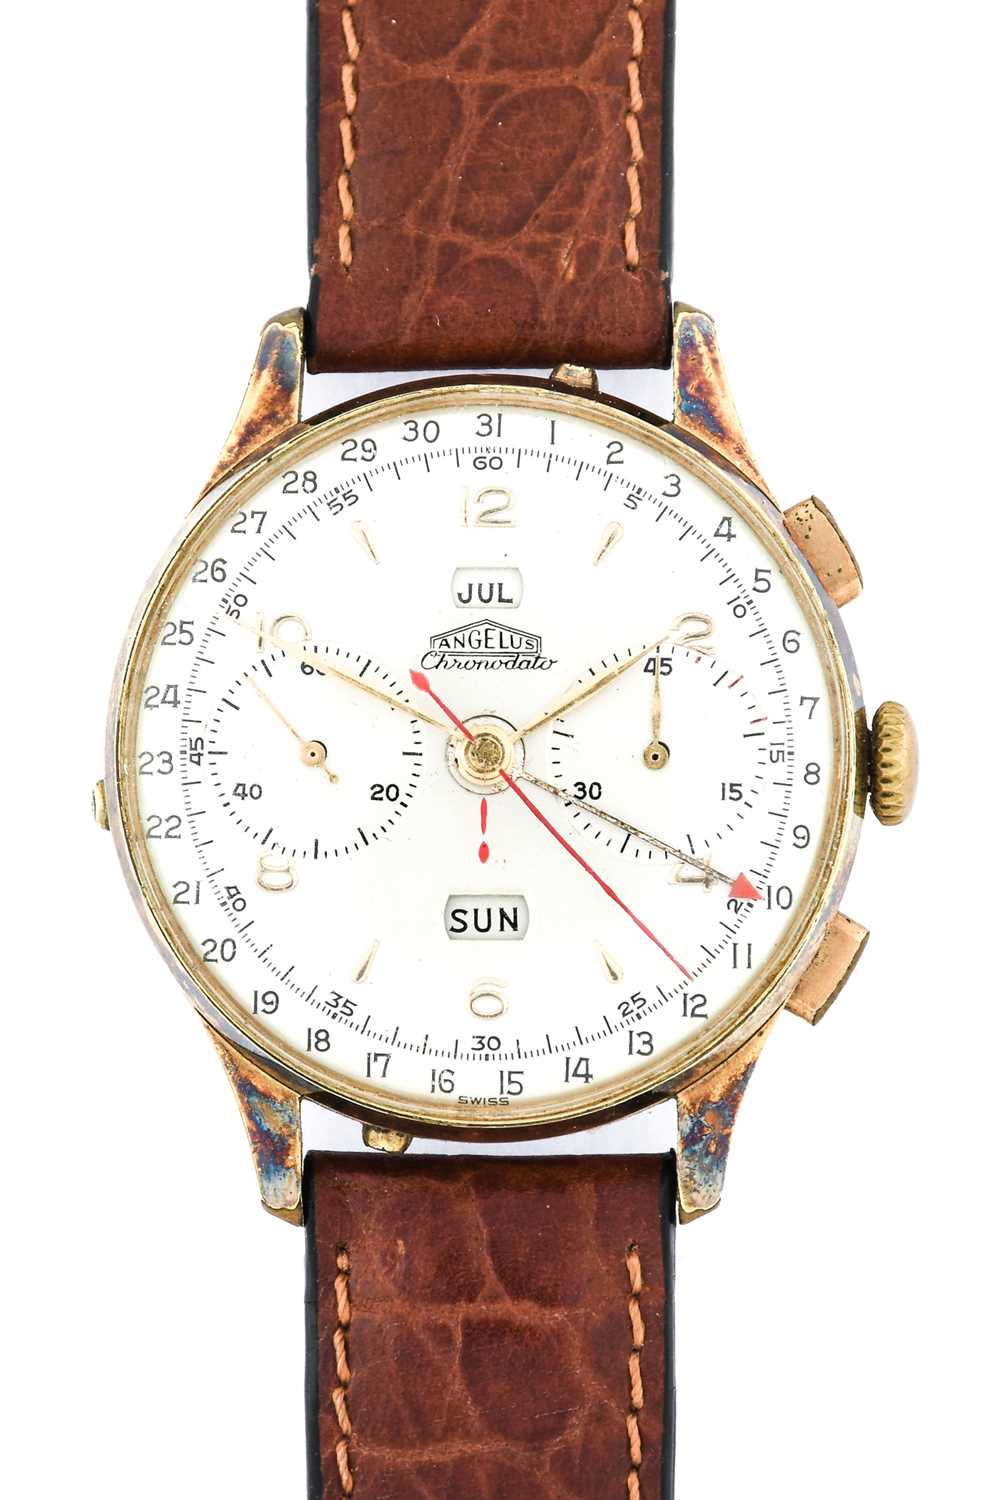 Angelus: A Plated Triple Calendar Chronograph Wristwatch, signed Angelus, model: Chronodato, circa